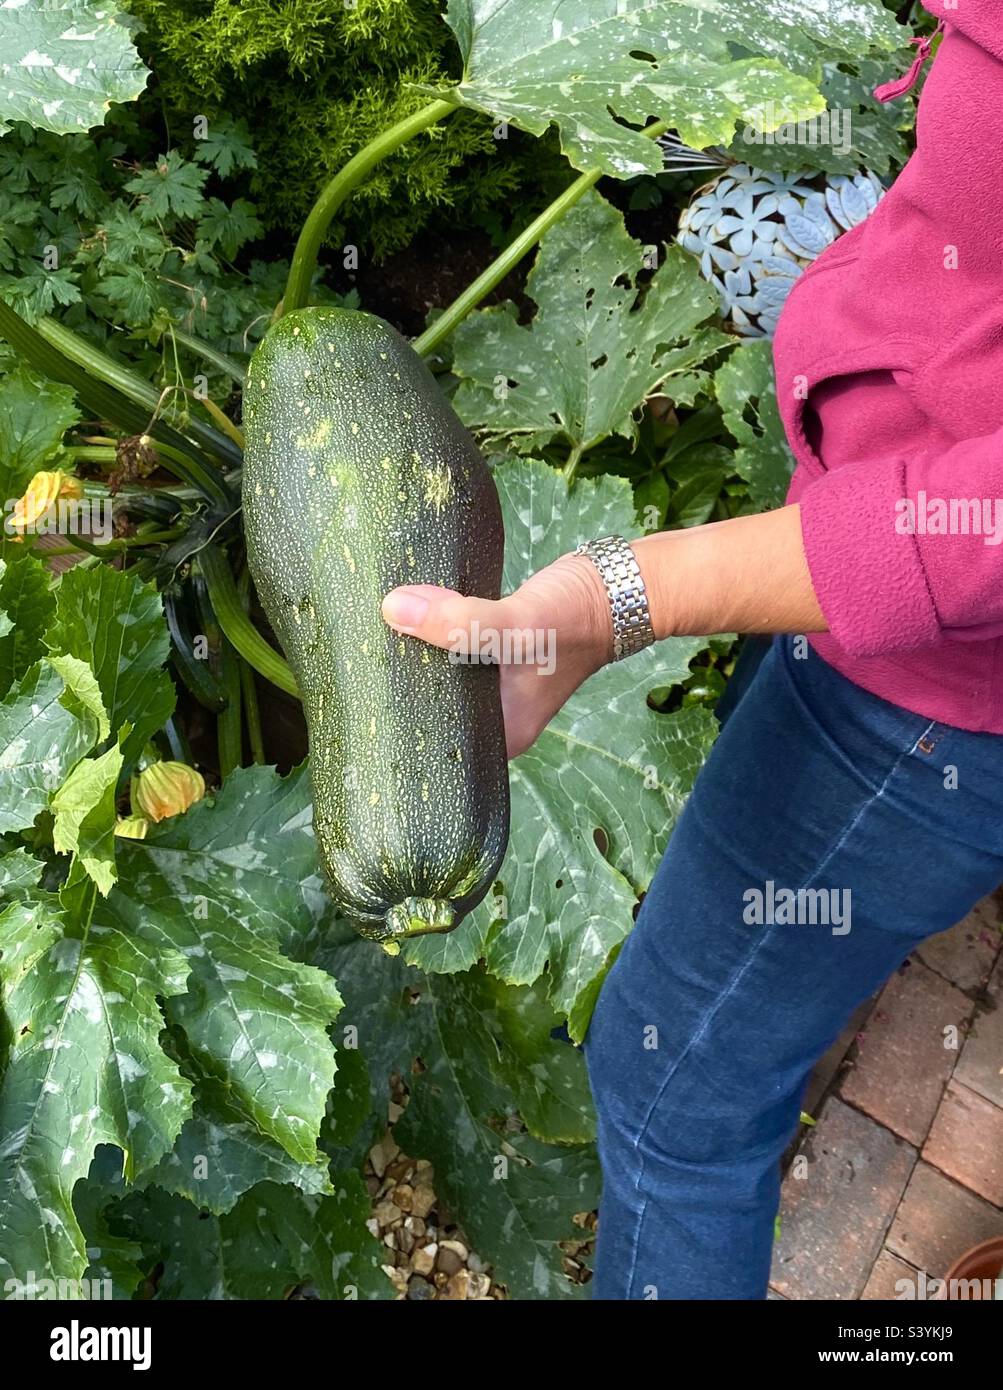 Large marrow vegetable growing in the garden Stock Photo